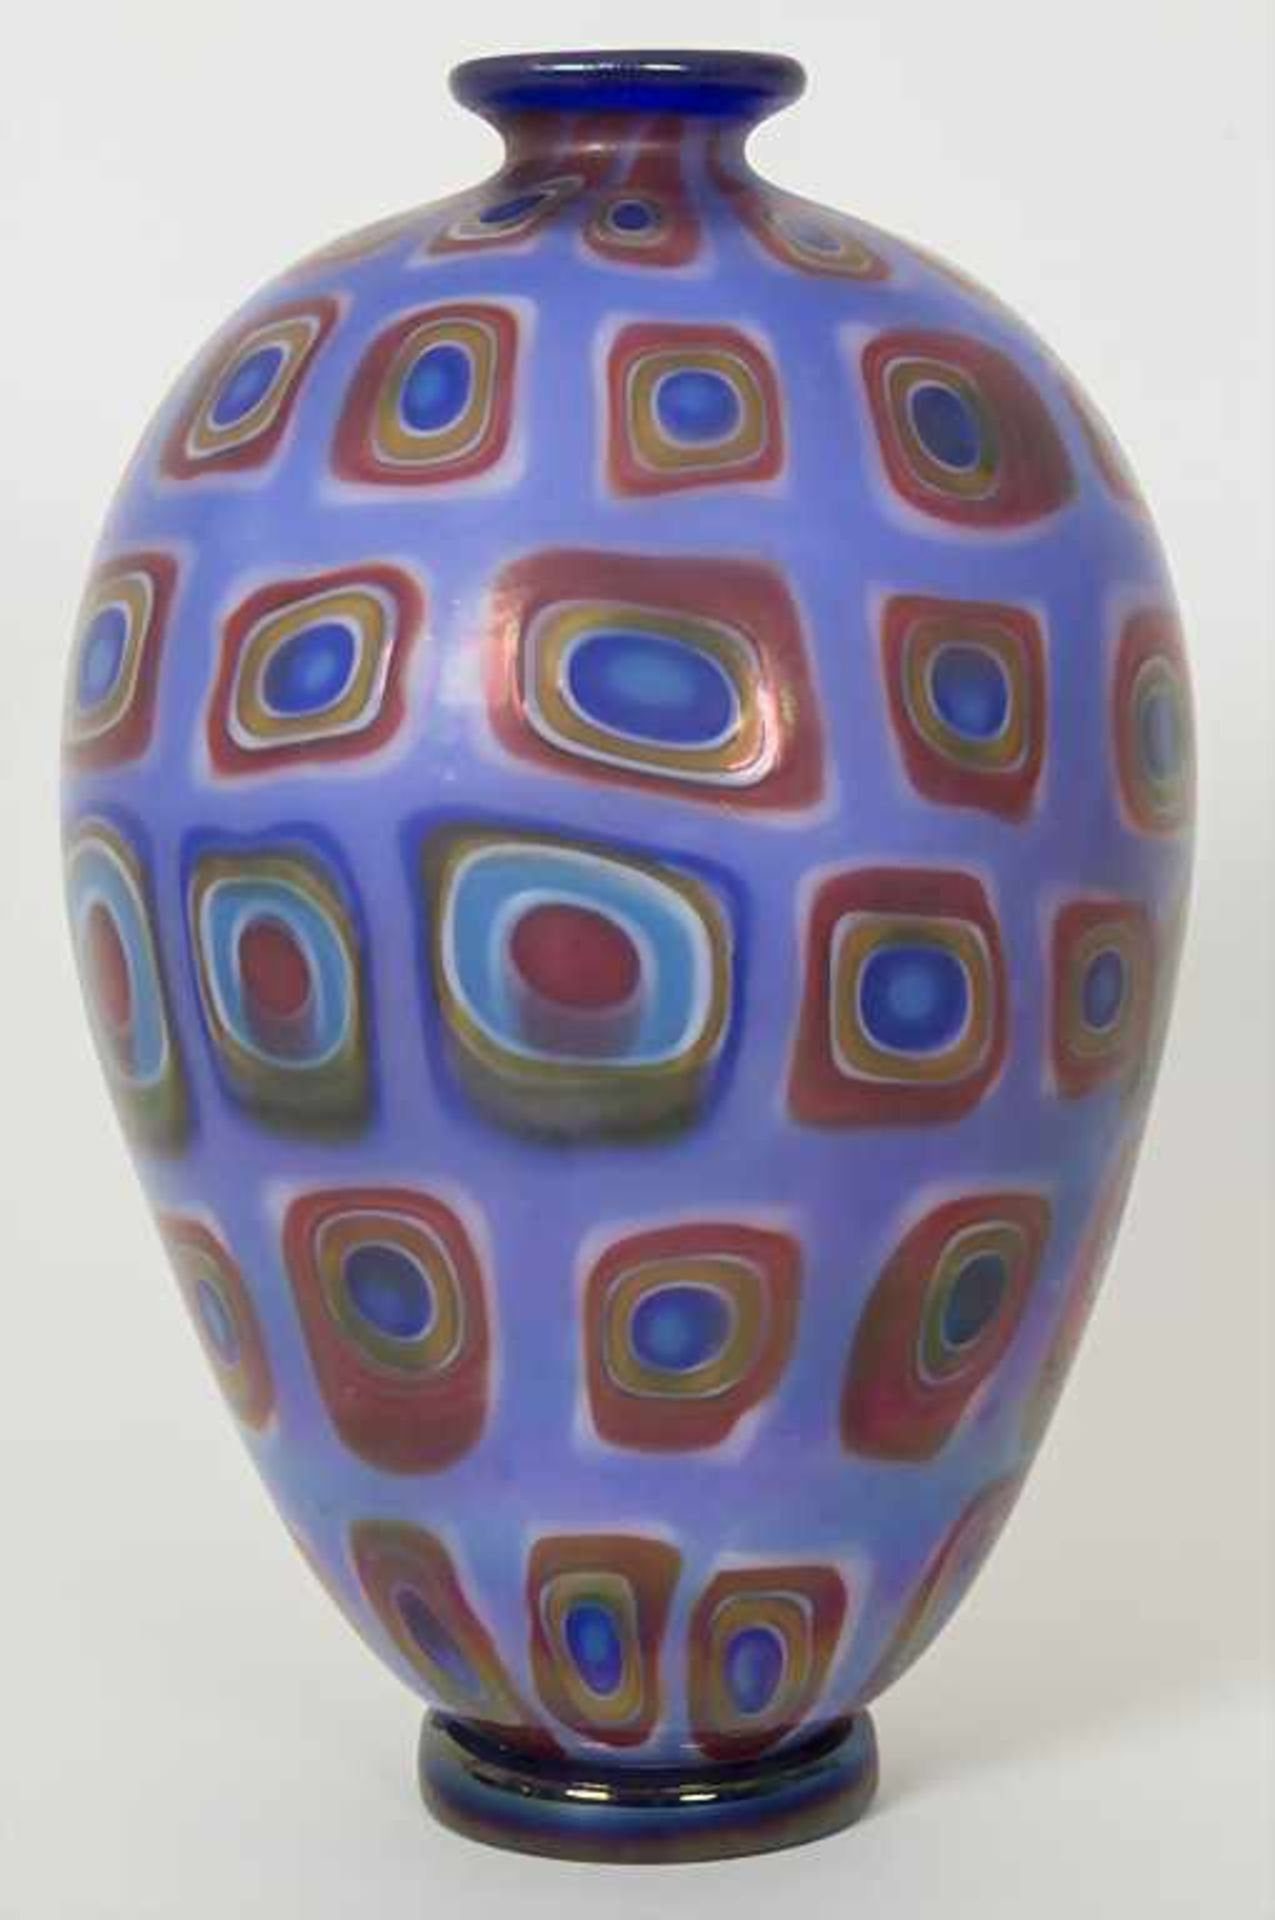 Große Vase / A large vase, Moretti Franco, Murano, 2. Hälfte 20. Jh.Material: farbloses Glas, in der